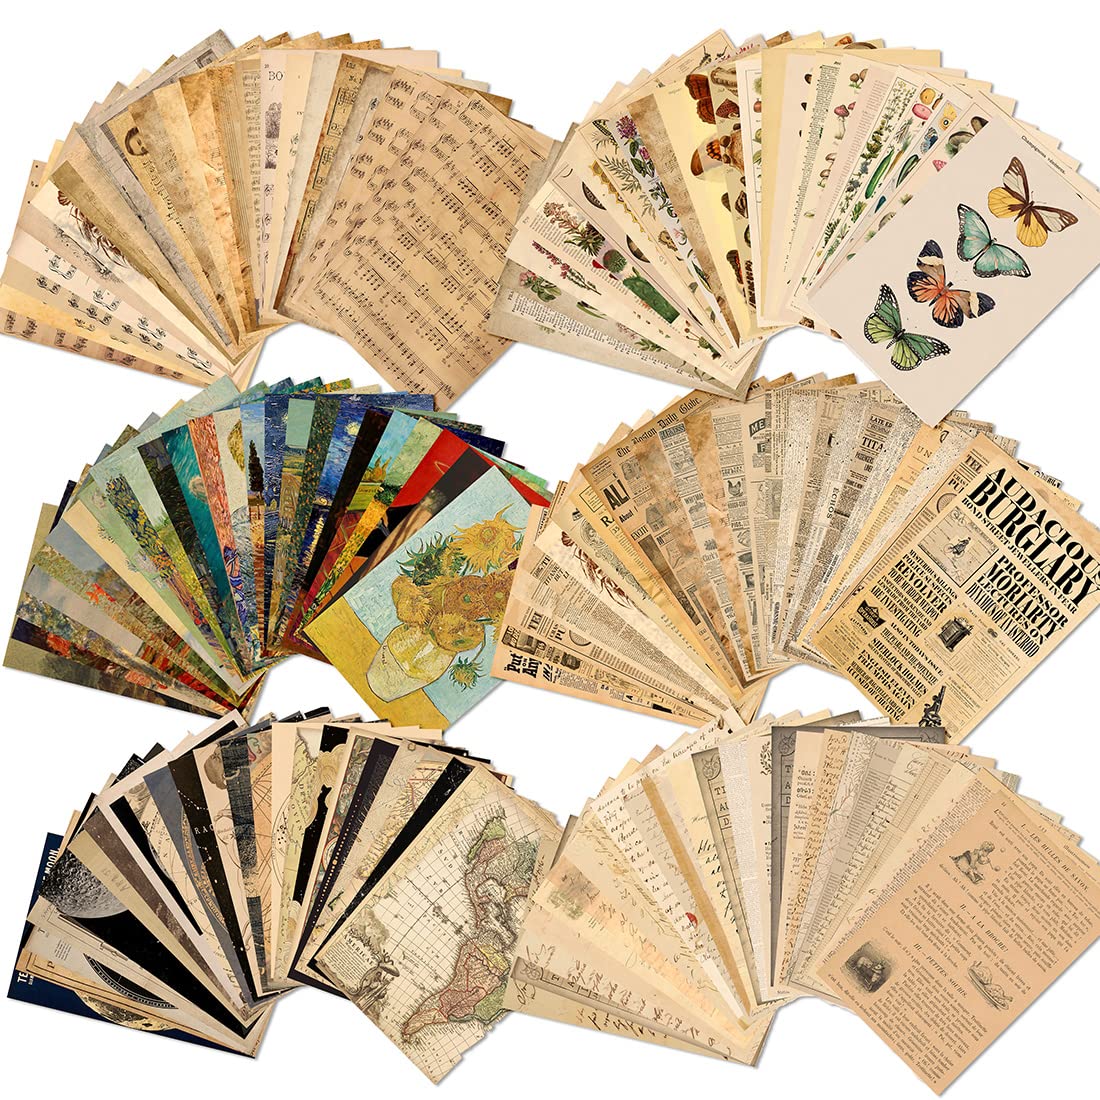 Retro Themed Paper Book Scrapbook Supplies 8 THEME CHOICES Craft Paper  Supplies Junk Journal Supplies Decorative Paper Collage 